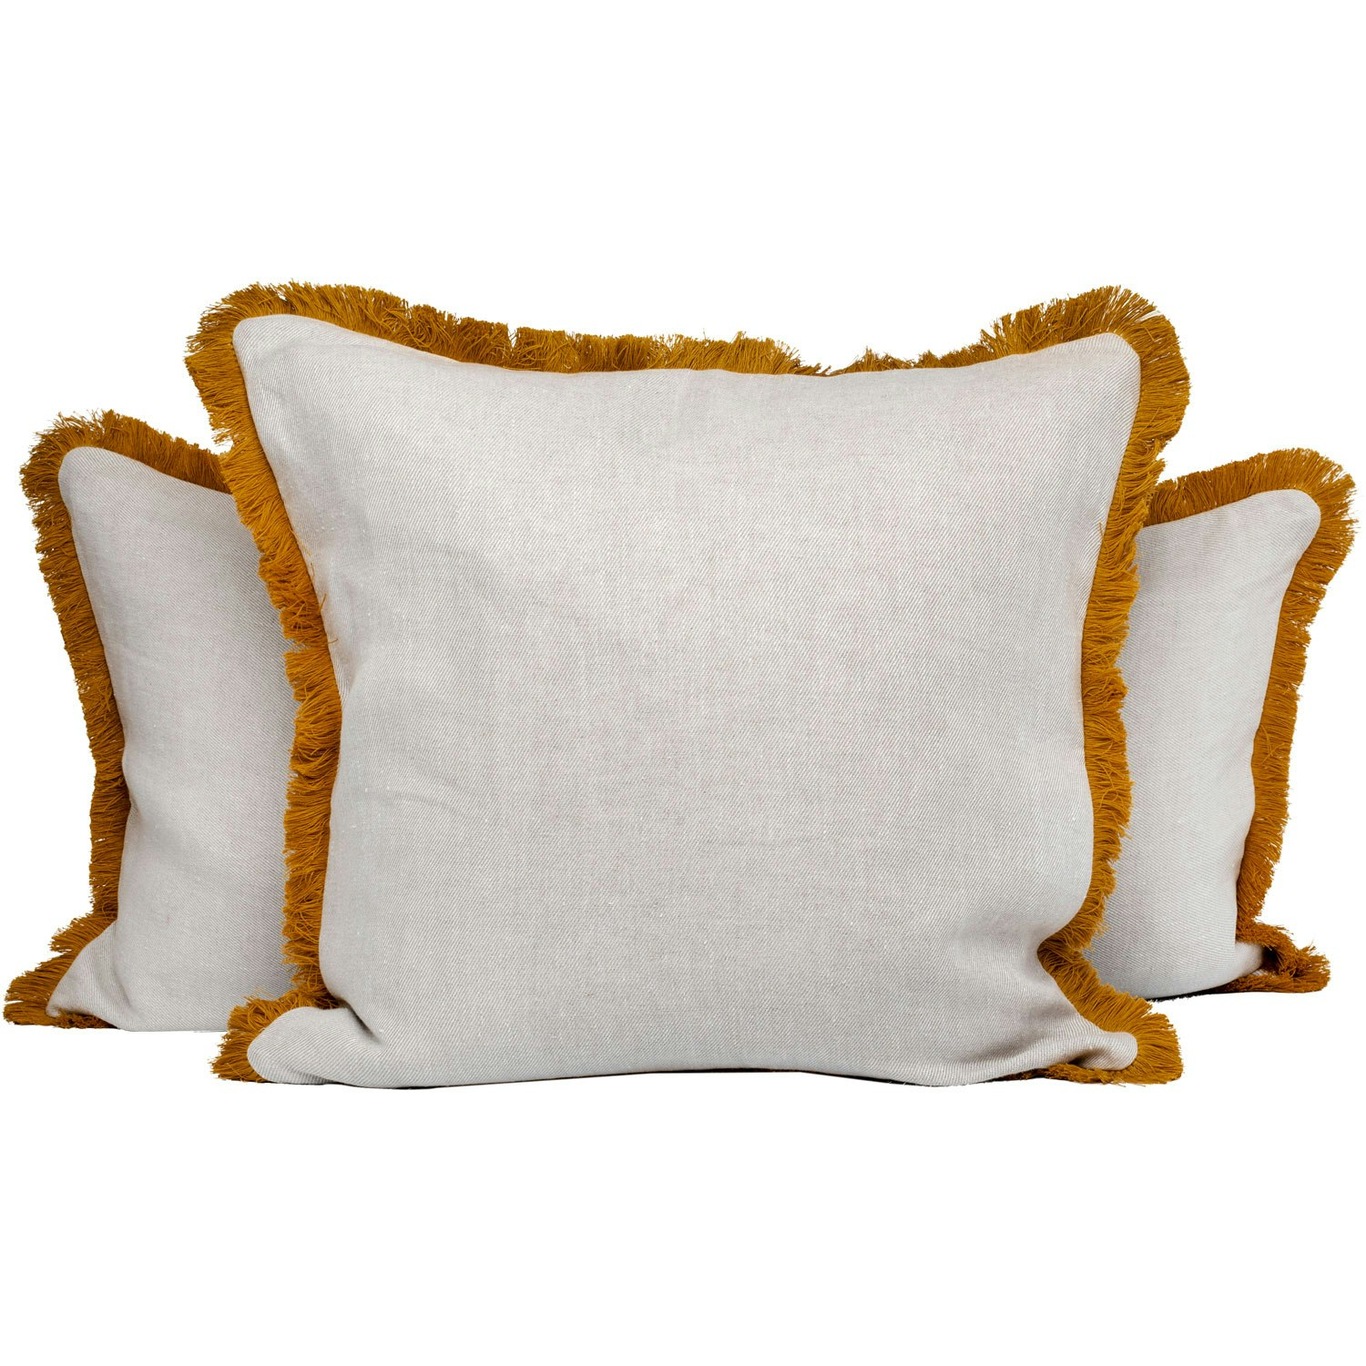 Pienza Cushion Cover 40x80 cm, Beige/Yellow